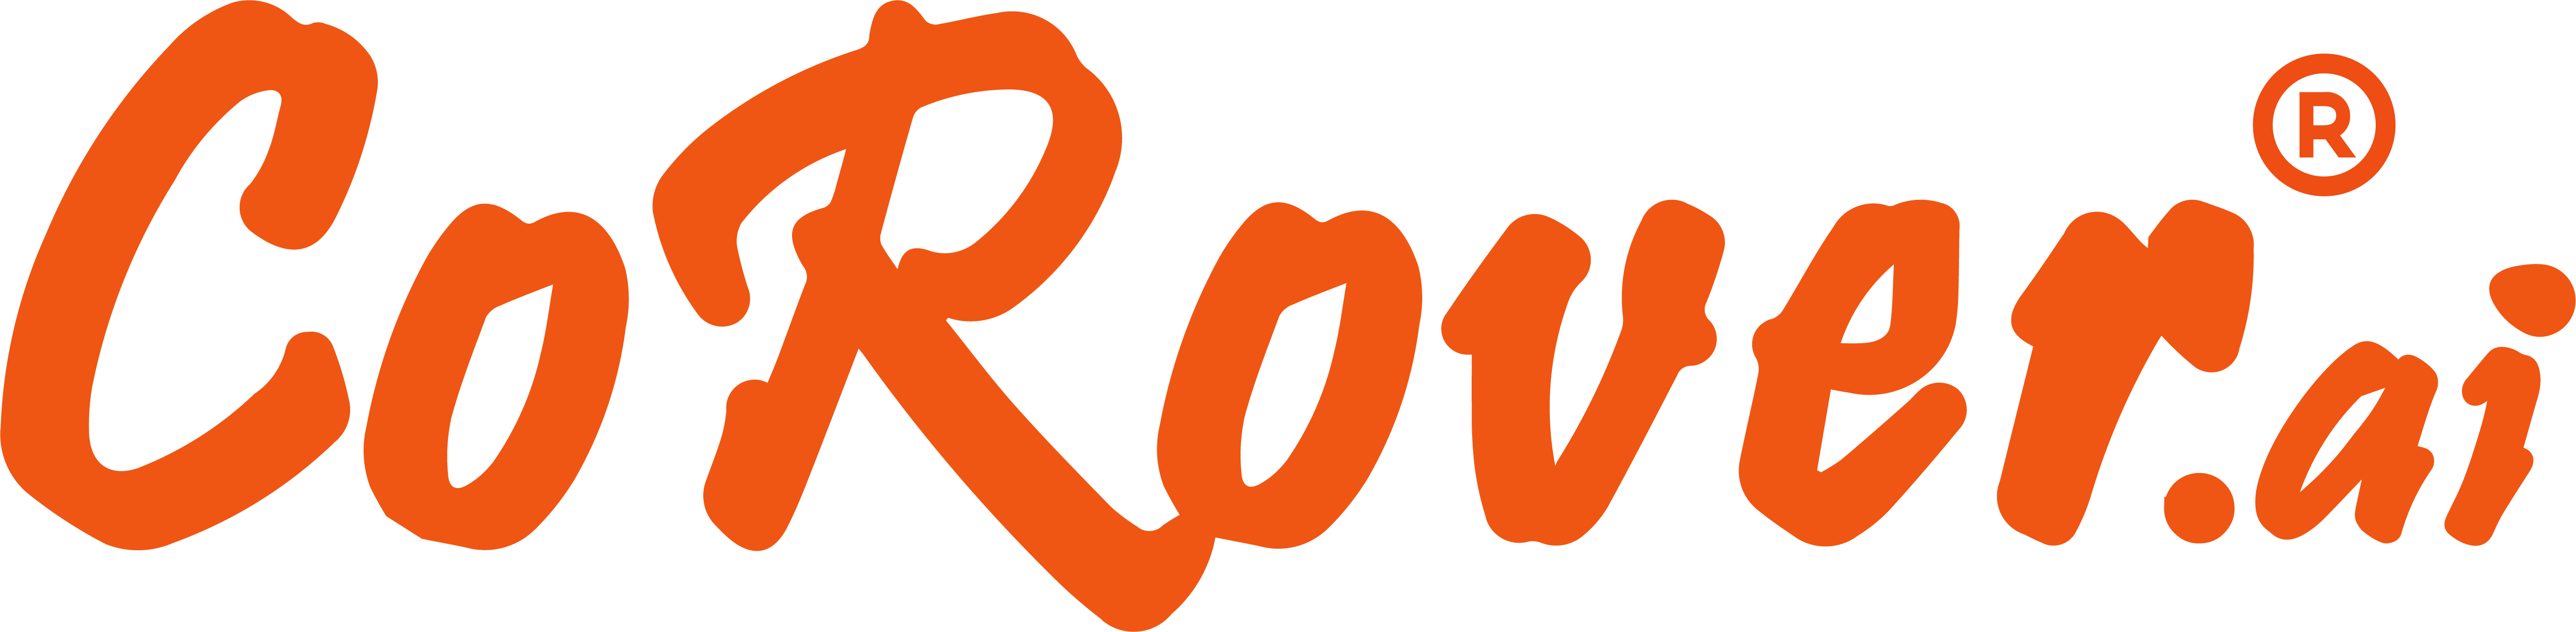 Logotipo da CoRover